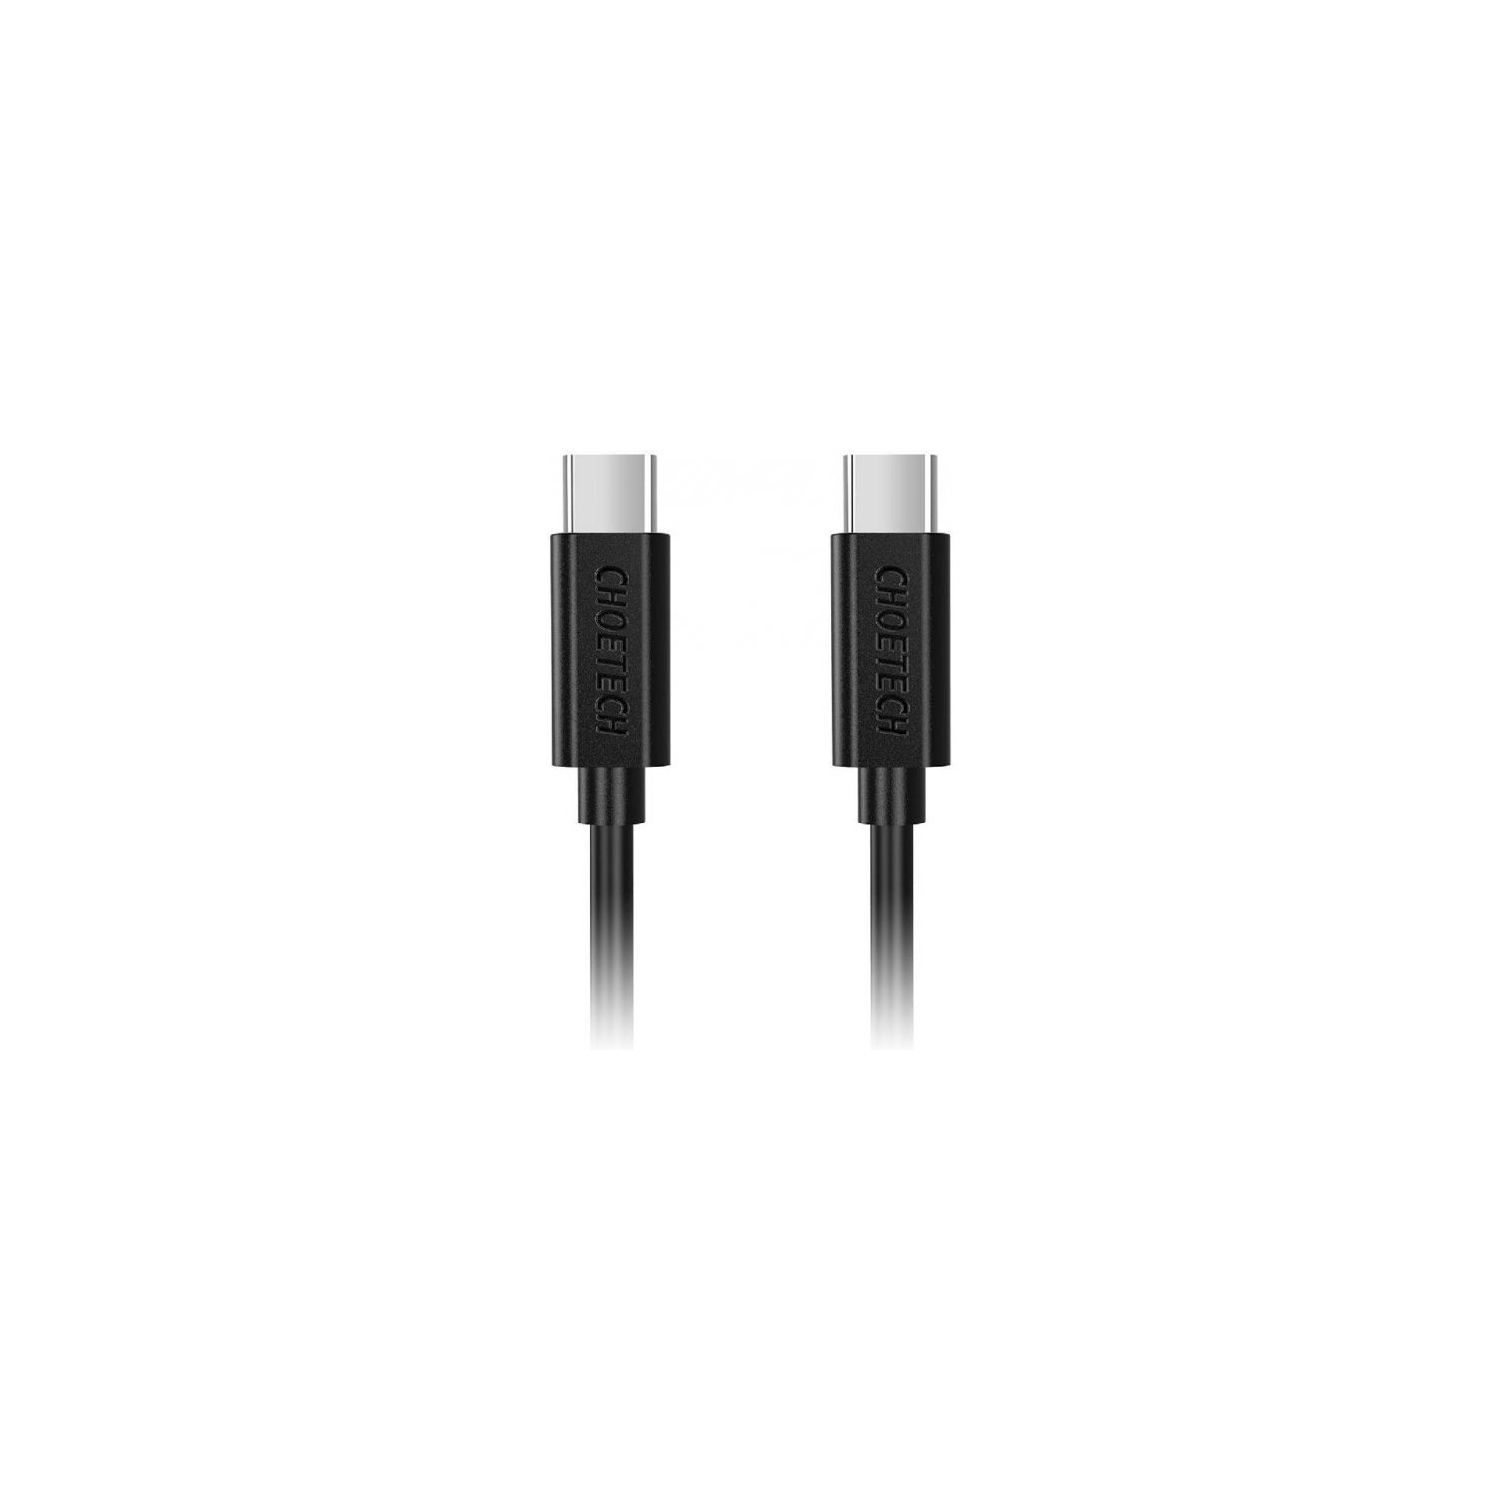 Choetech USB-C to USB-C Cable 2m (CC0003) - Brand New